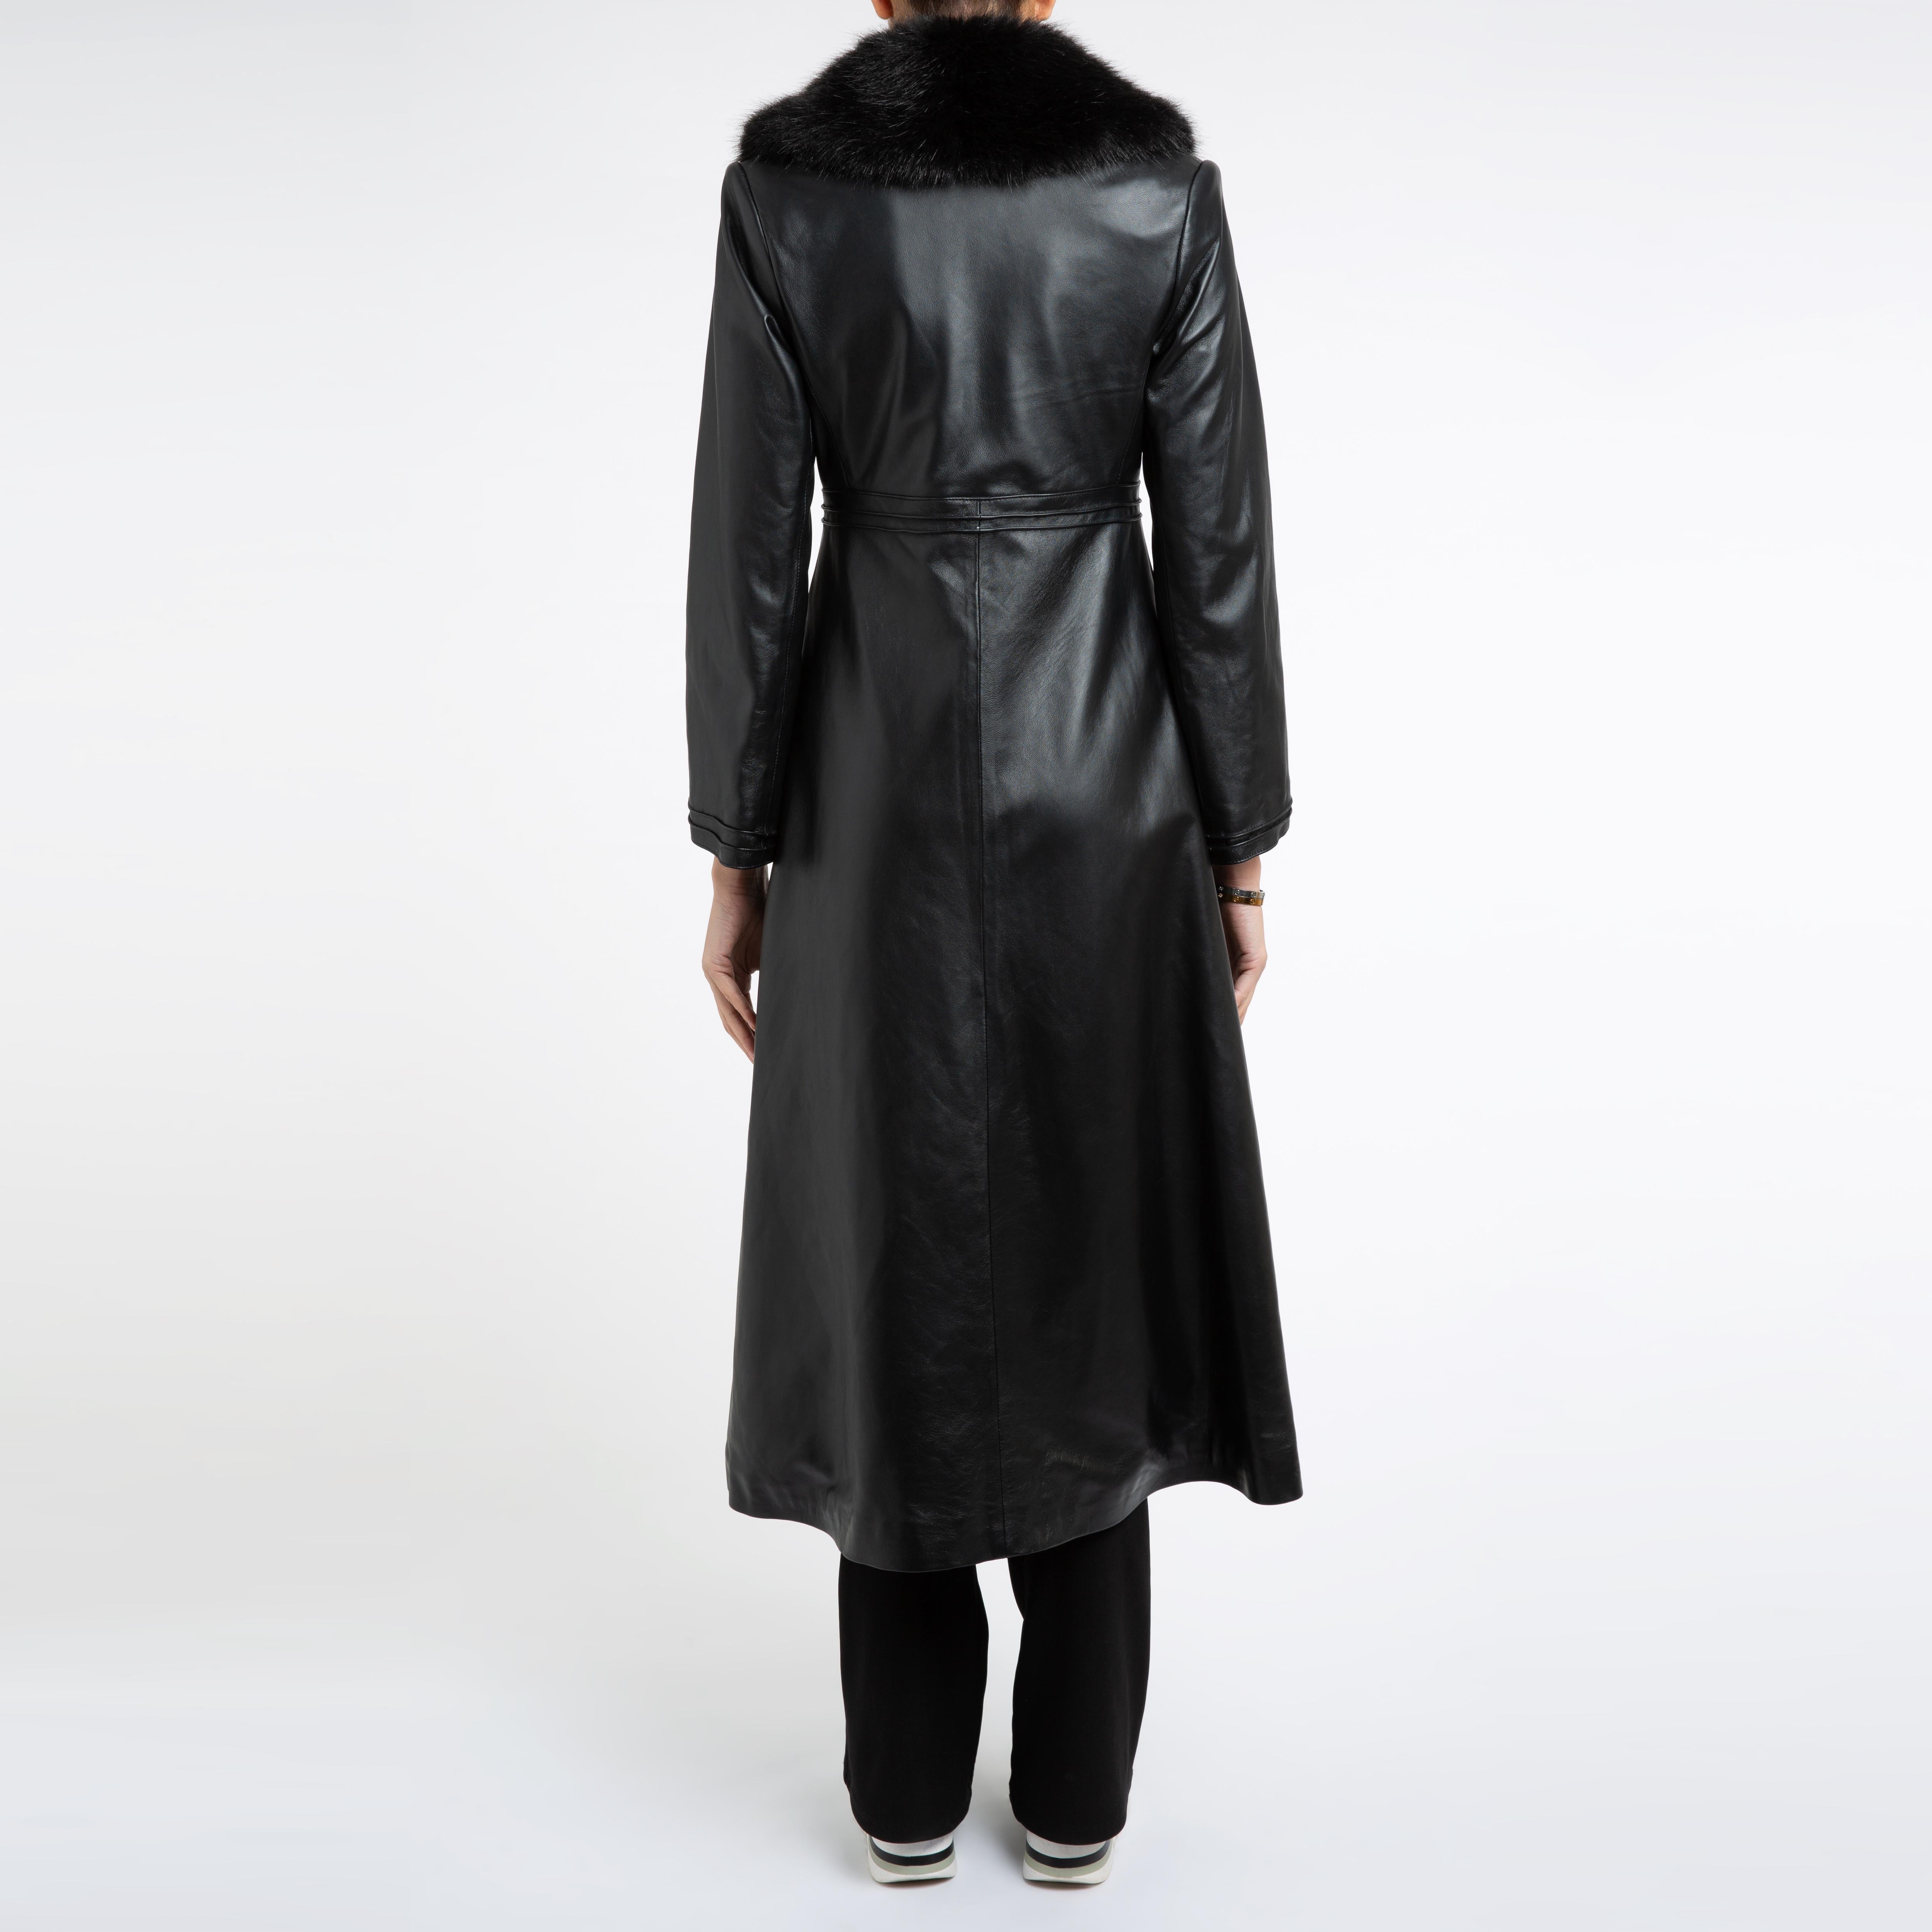 Verheyen London Edward Leather Coat with Faux Fur Collar in Black - Size uk 16 For Sale 2